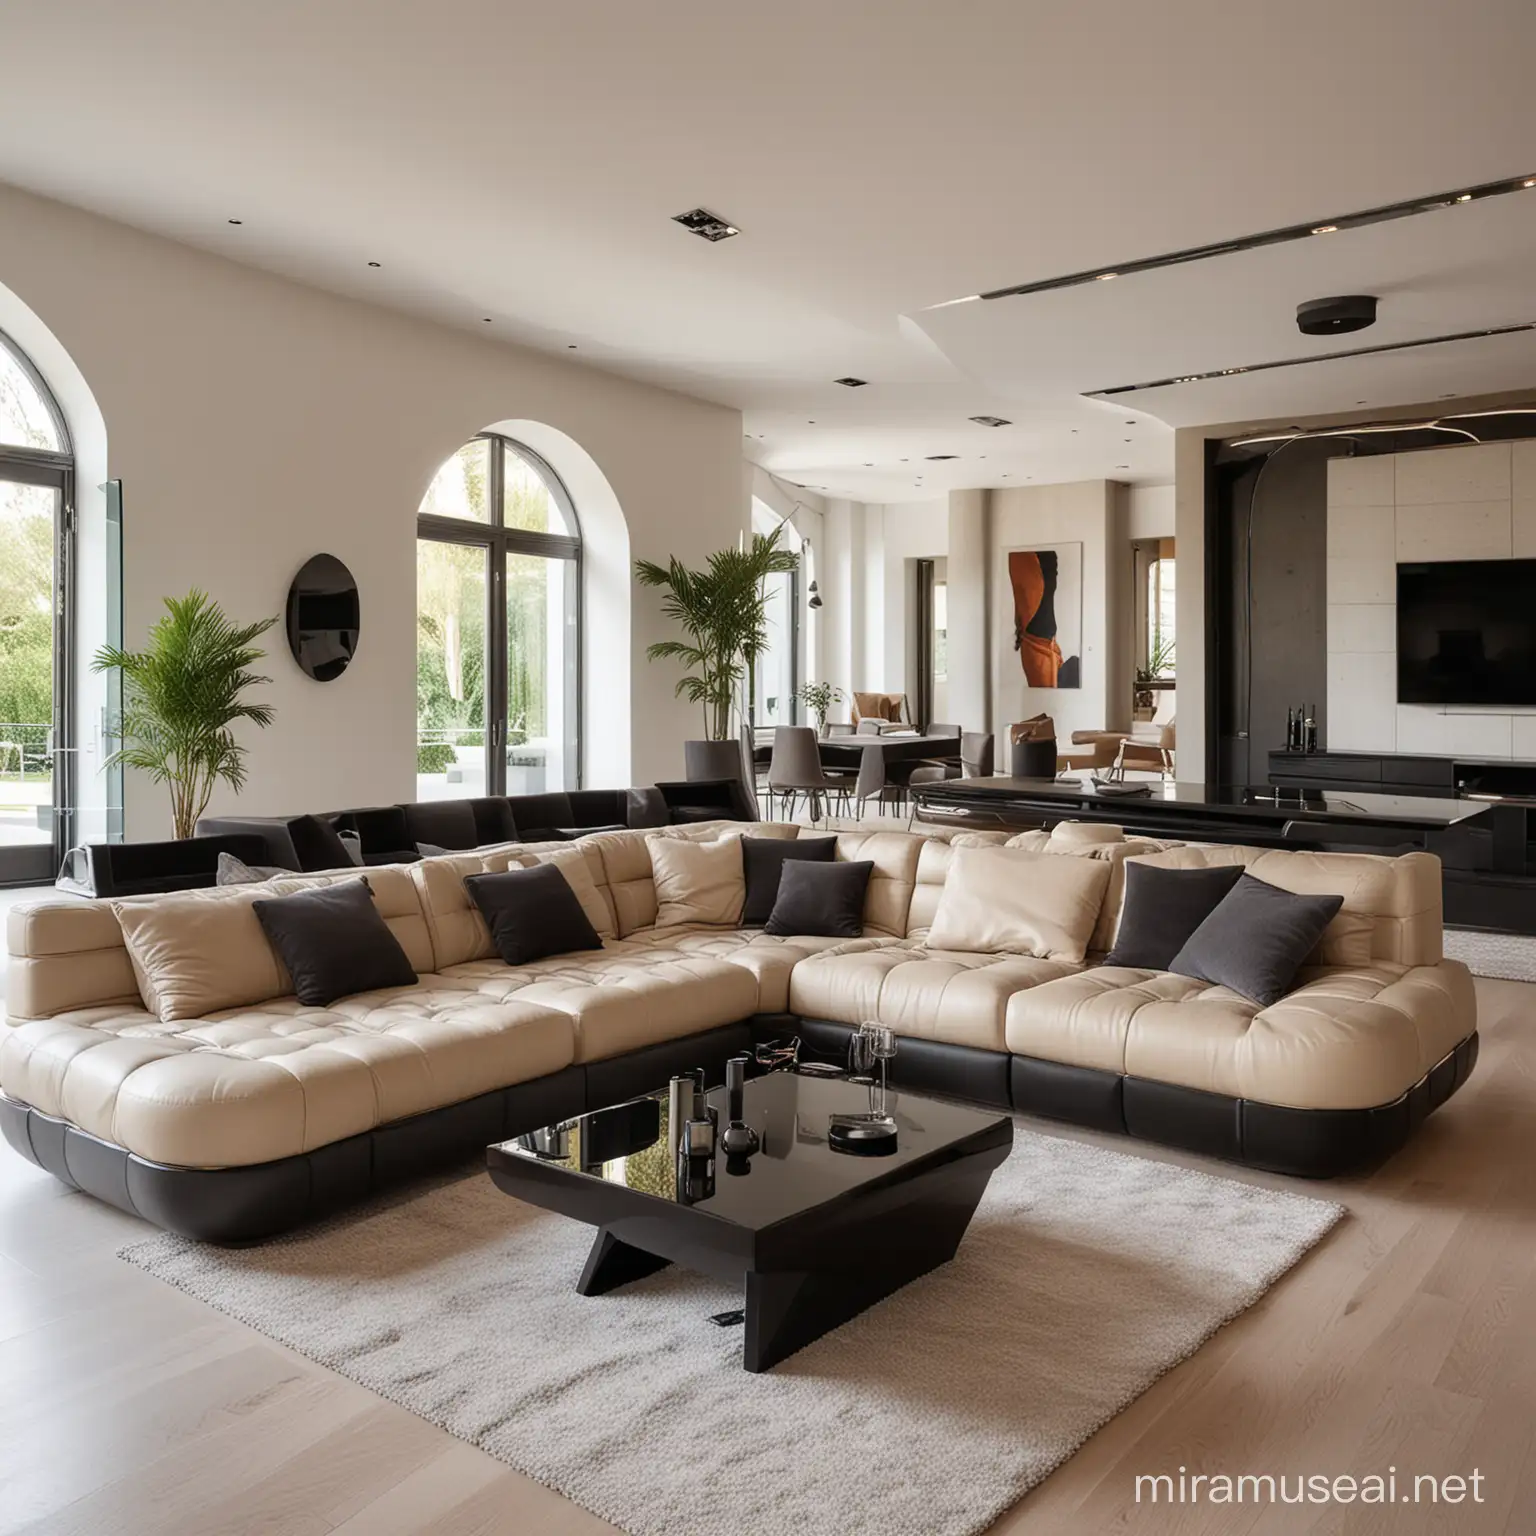 Futuristic Villa Interior with Modular Sofa and HighTech Gadgets